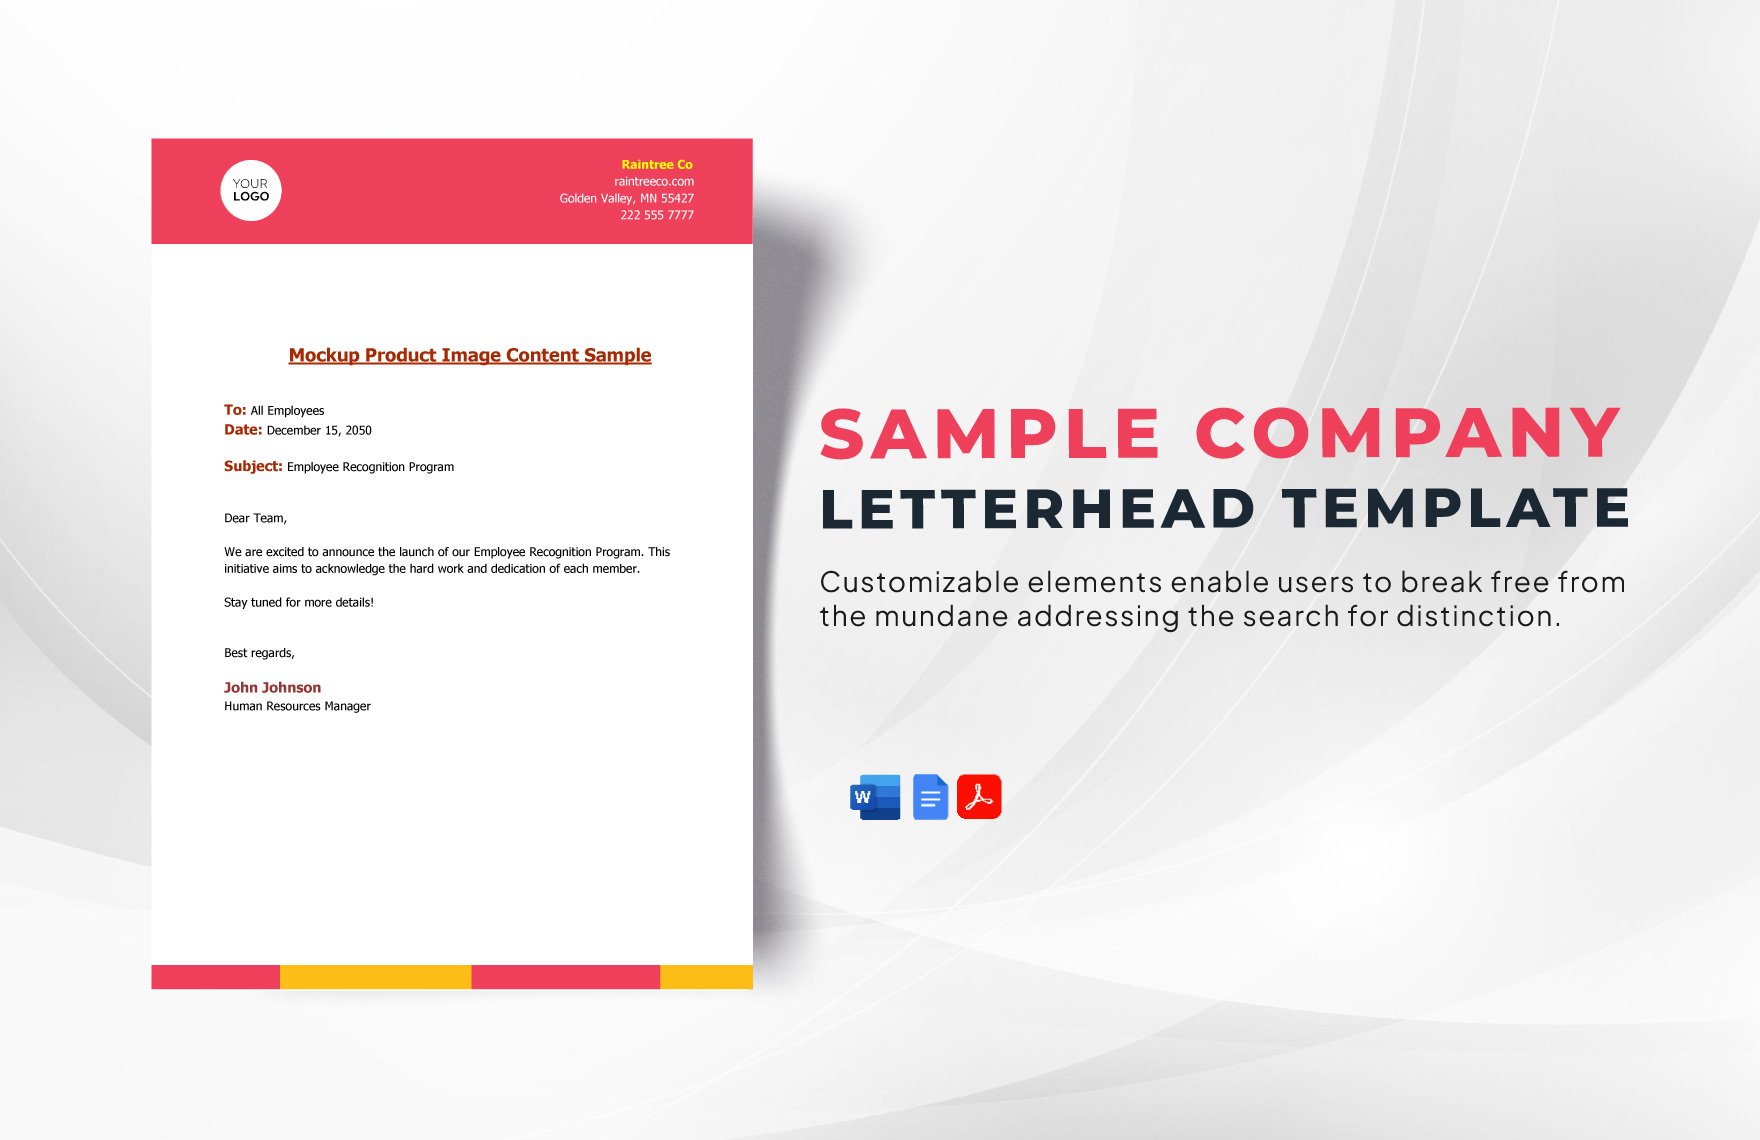 Sample Company Letterhead Template